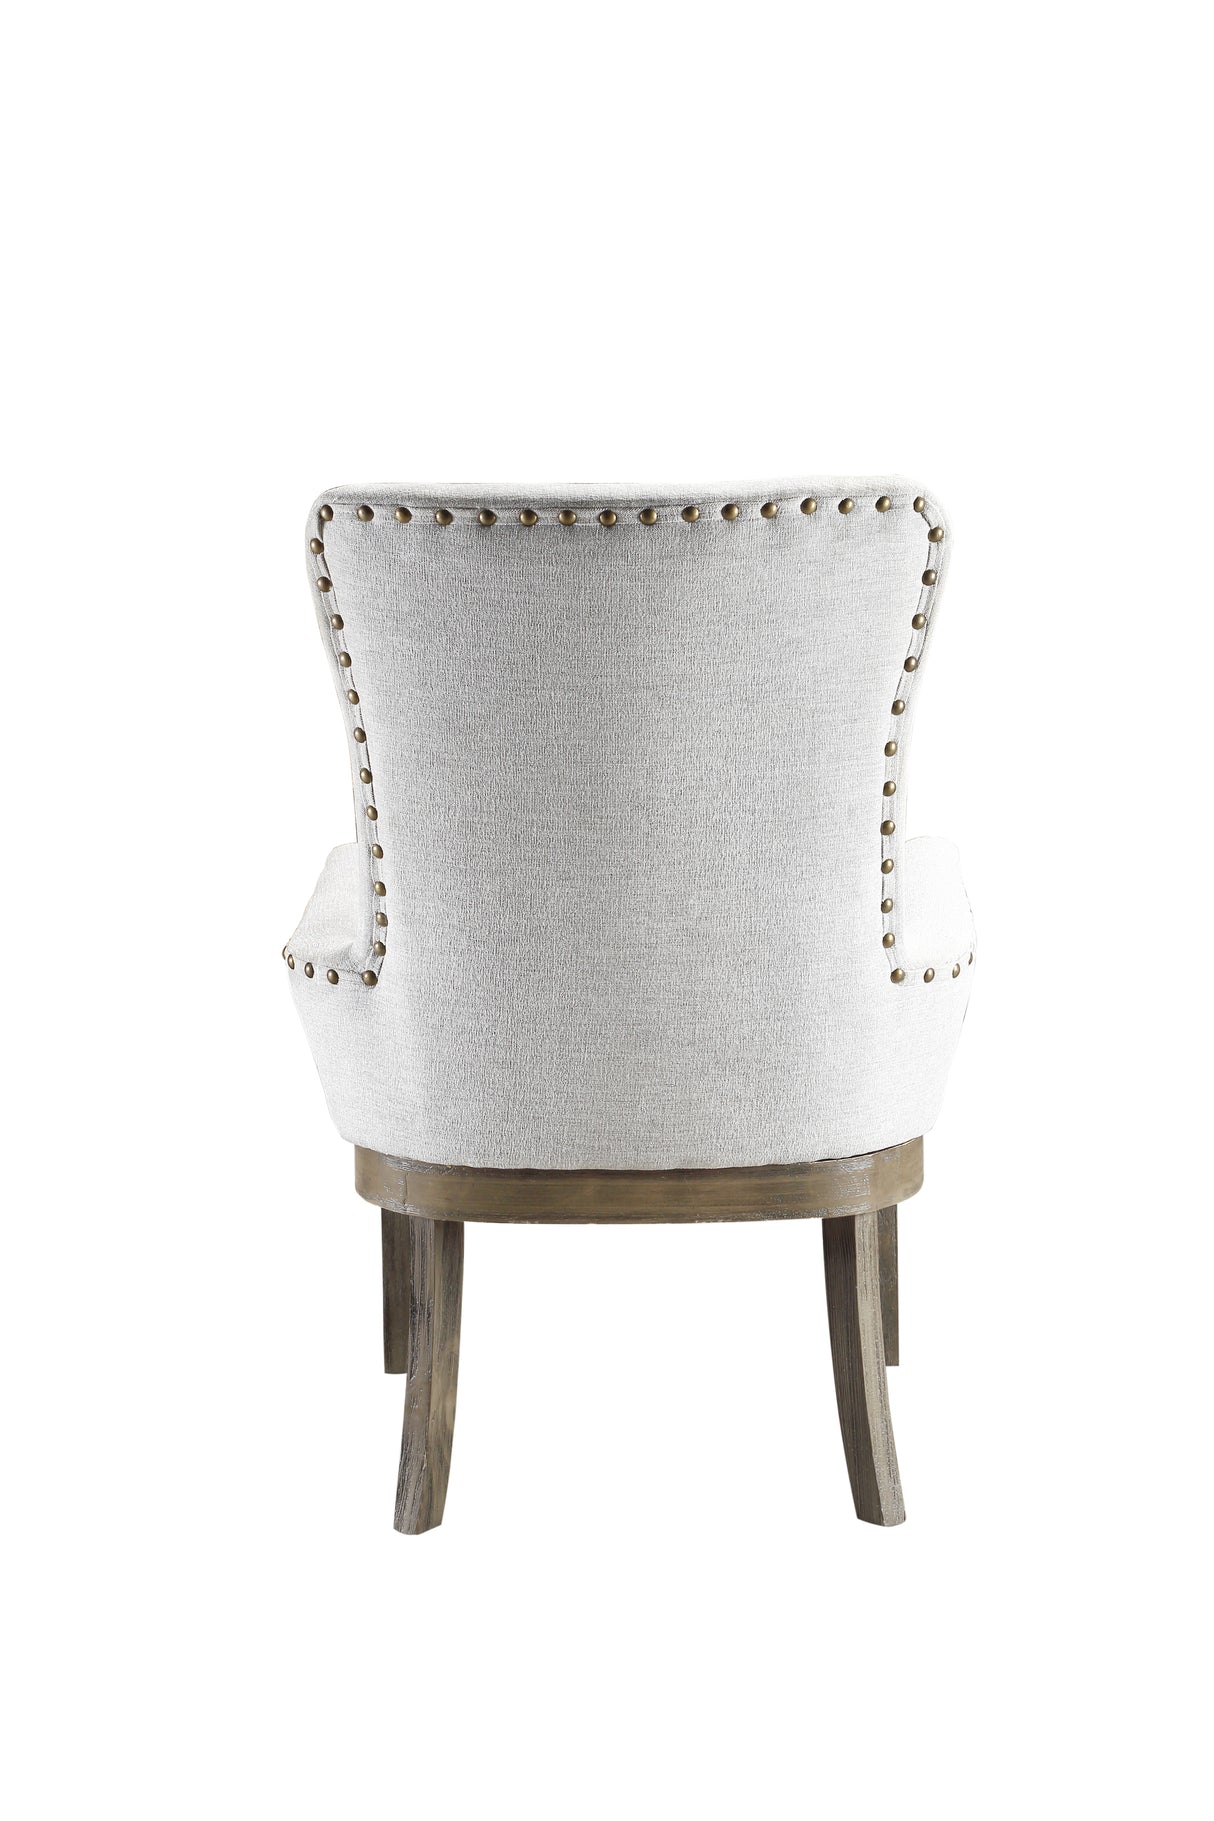 ACME Landon Arm Chair (1Pc), Gray Linen DN00952 - Home Elegance USA